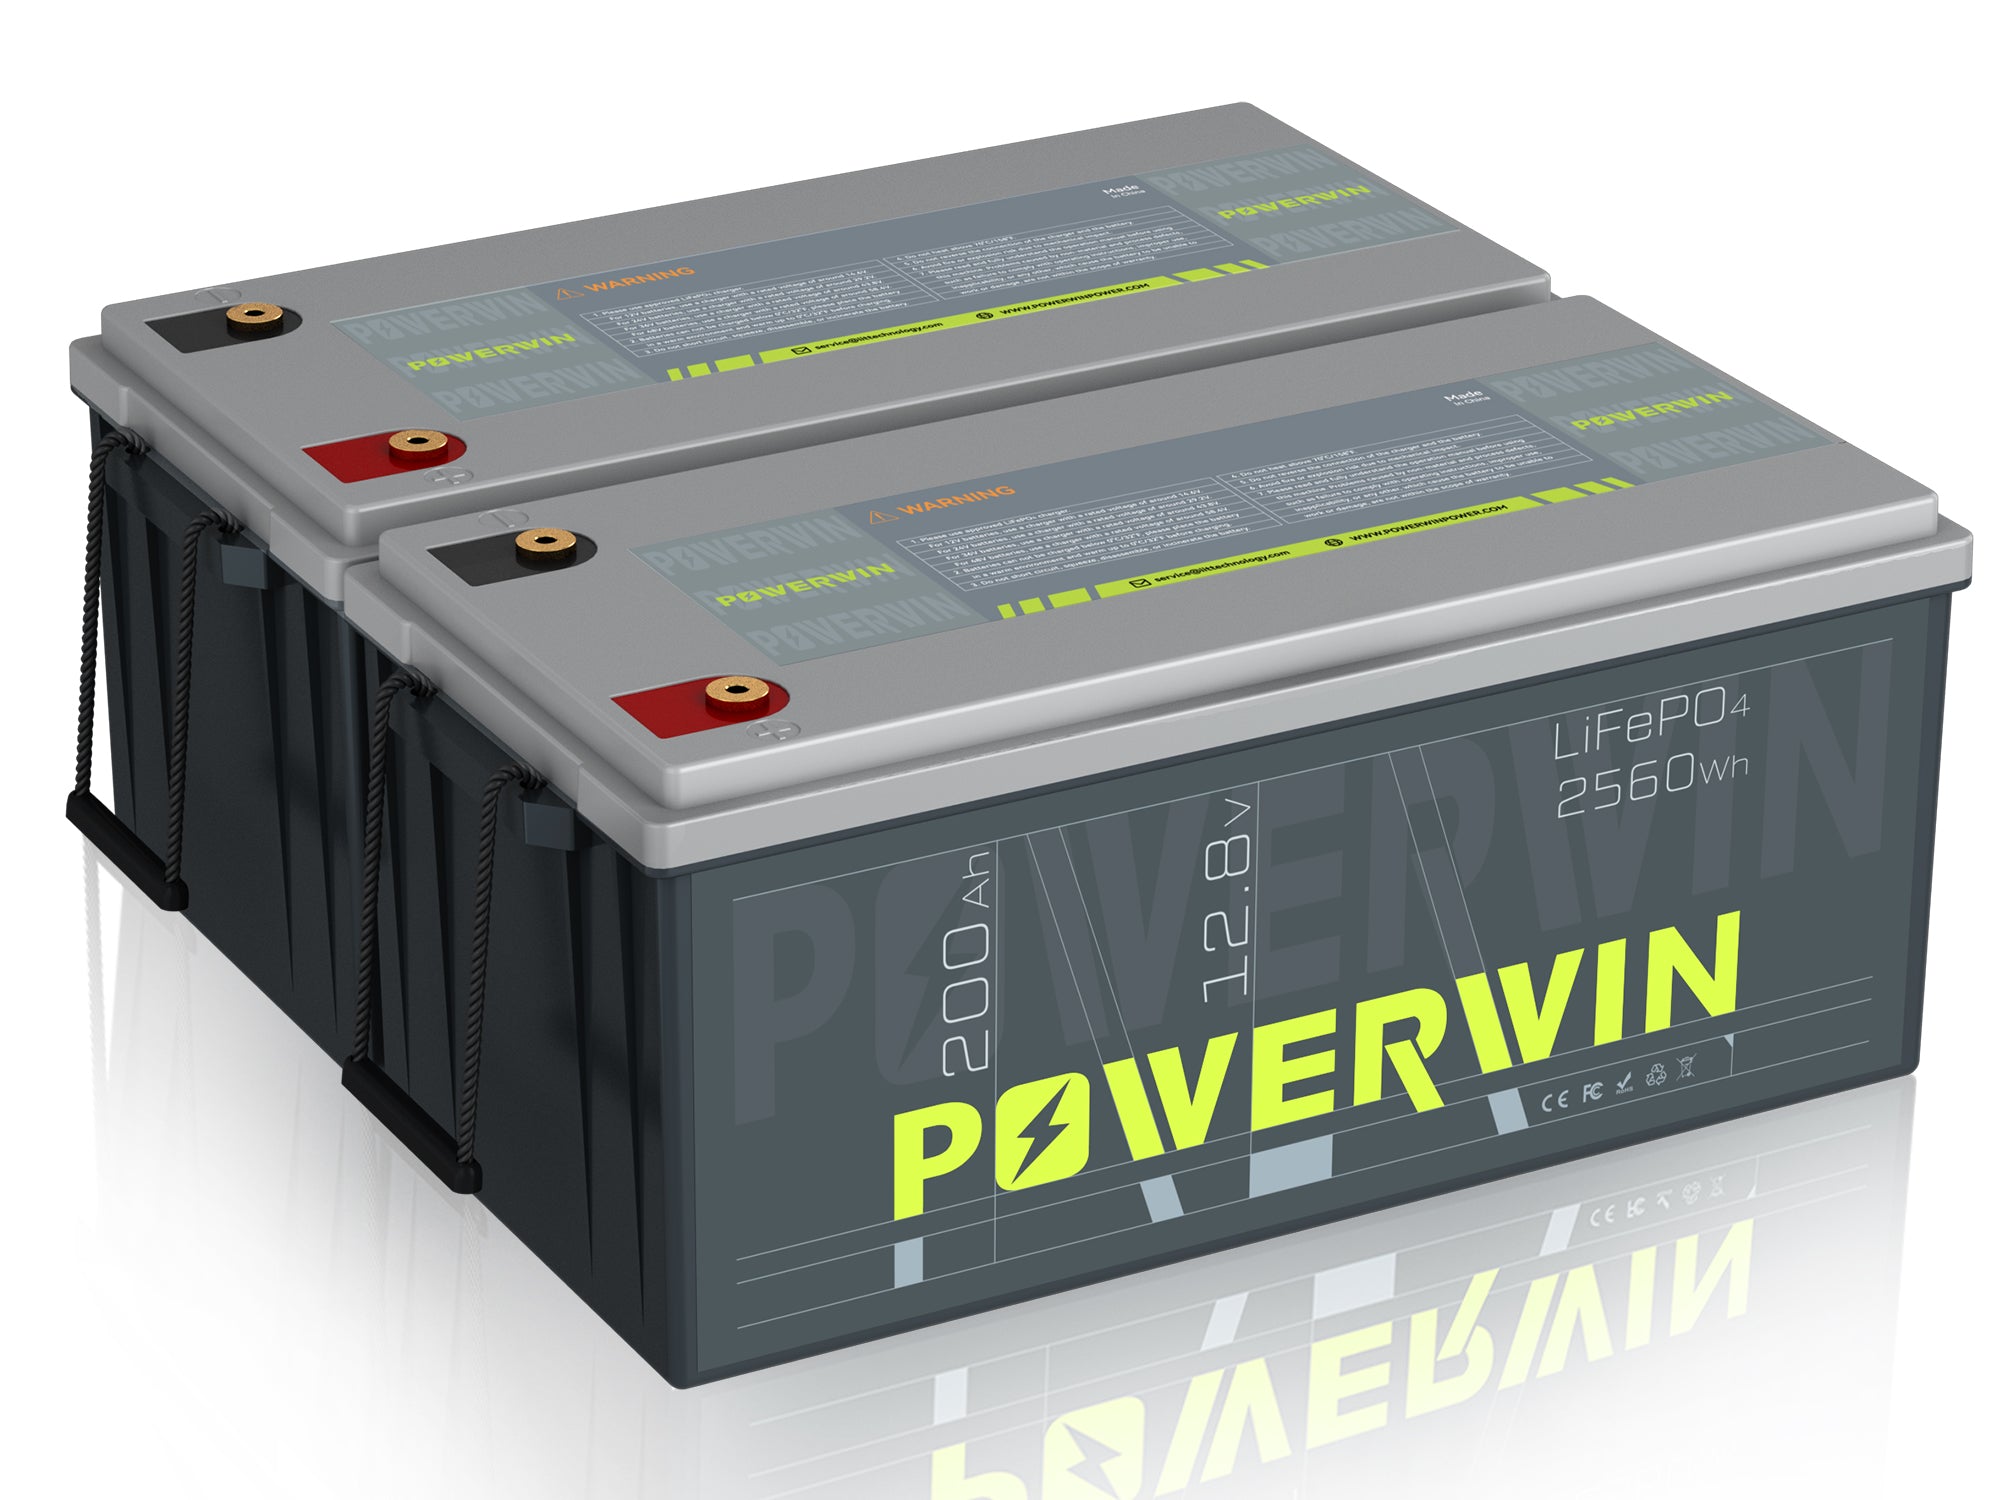 POWERWIN BT200 12.8V 200Ah 2560Wh LiFePO4 Battery